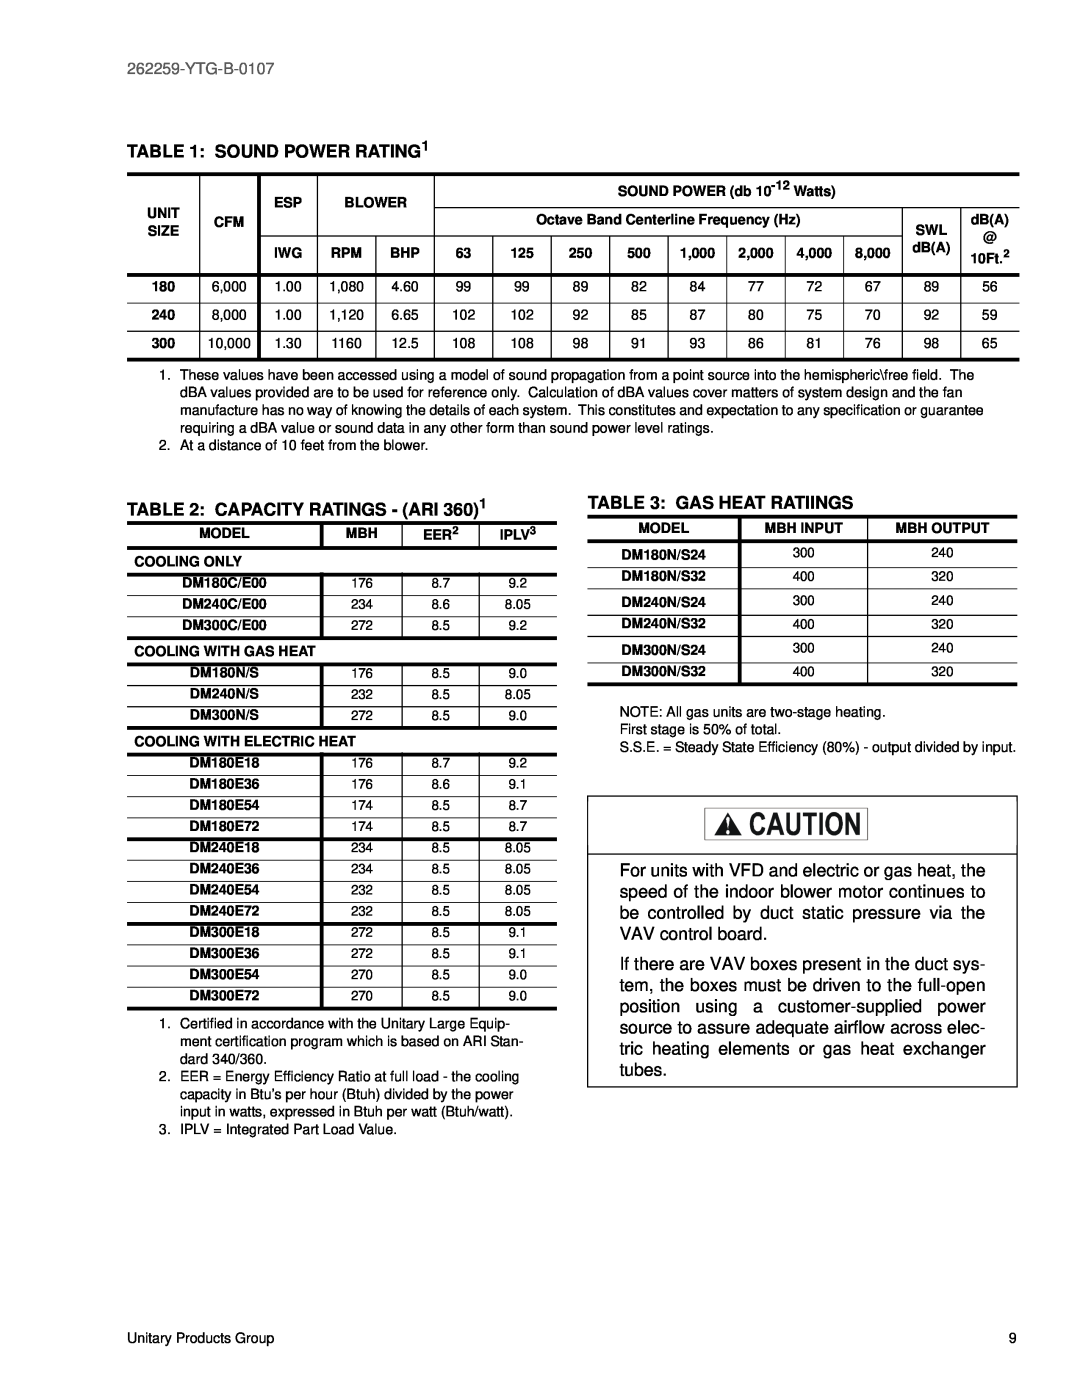 York DM 300, DM 240, DM 180 warranty SOUND POWER RATING1, Capacity Ratings - Ari, Gas Heat Ratiings 